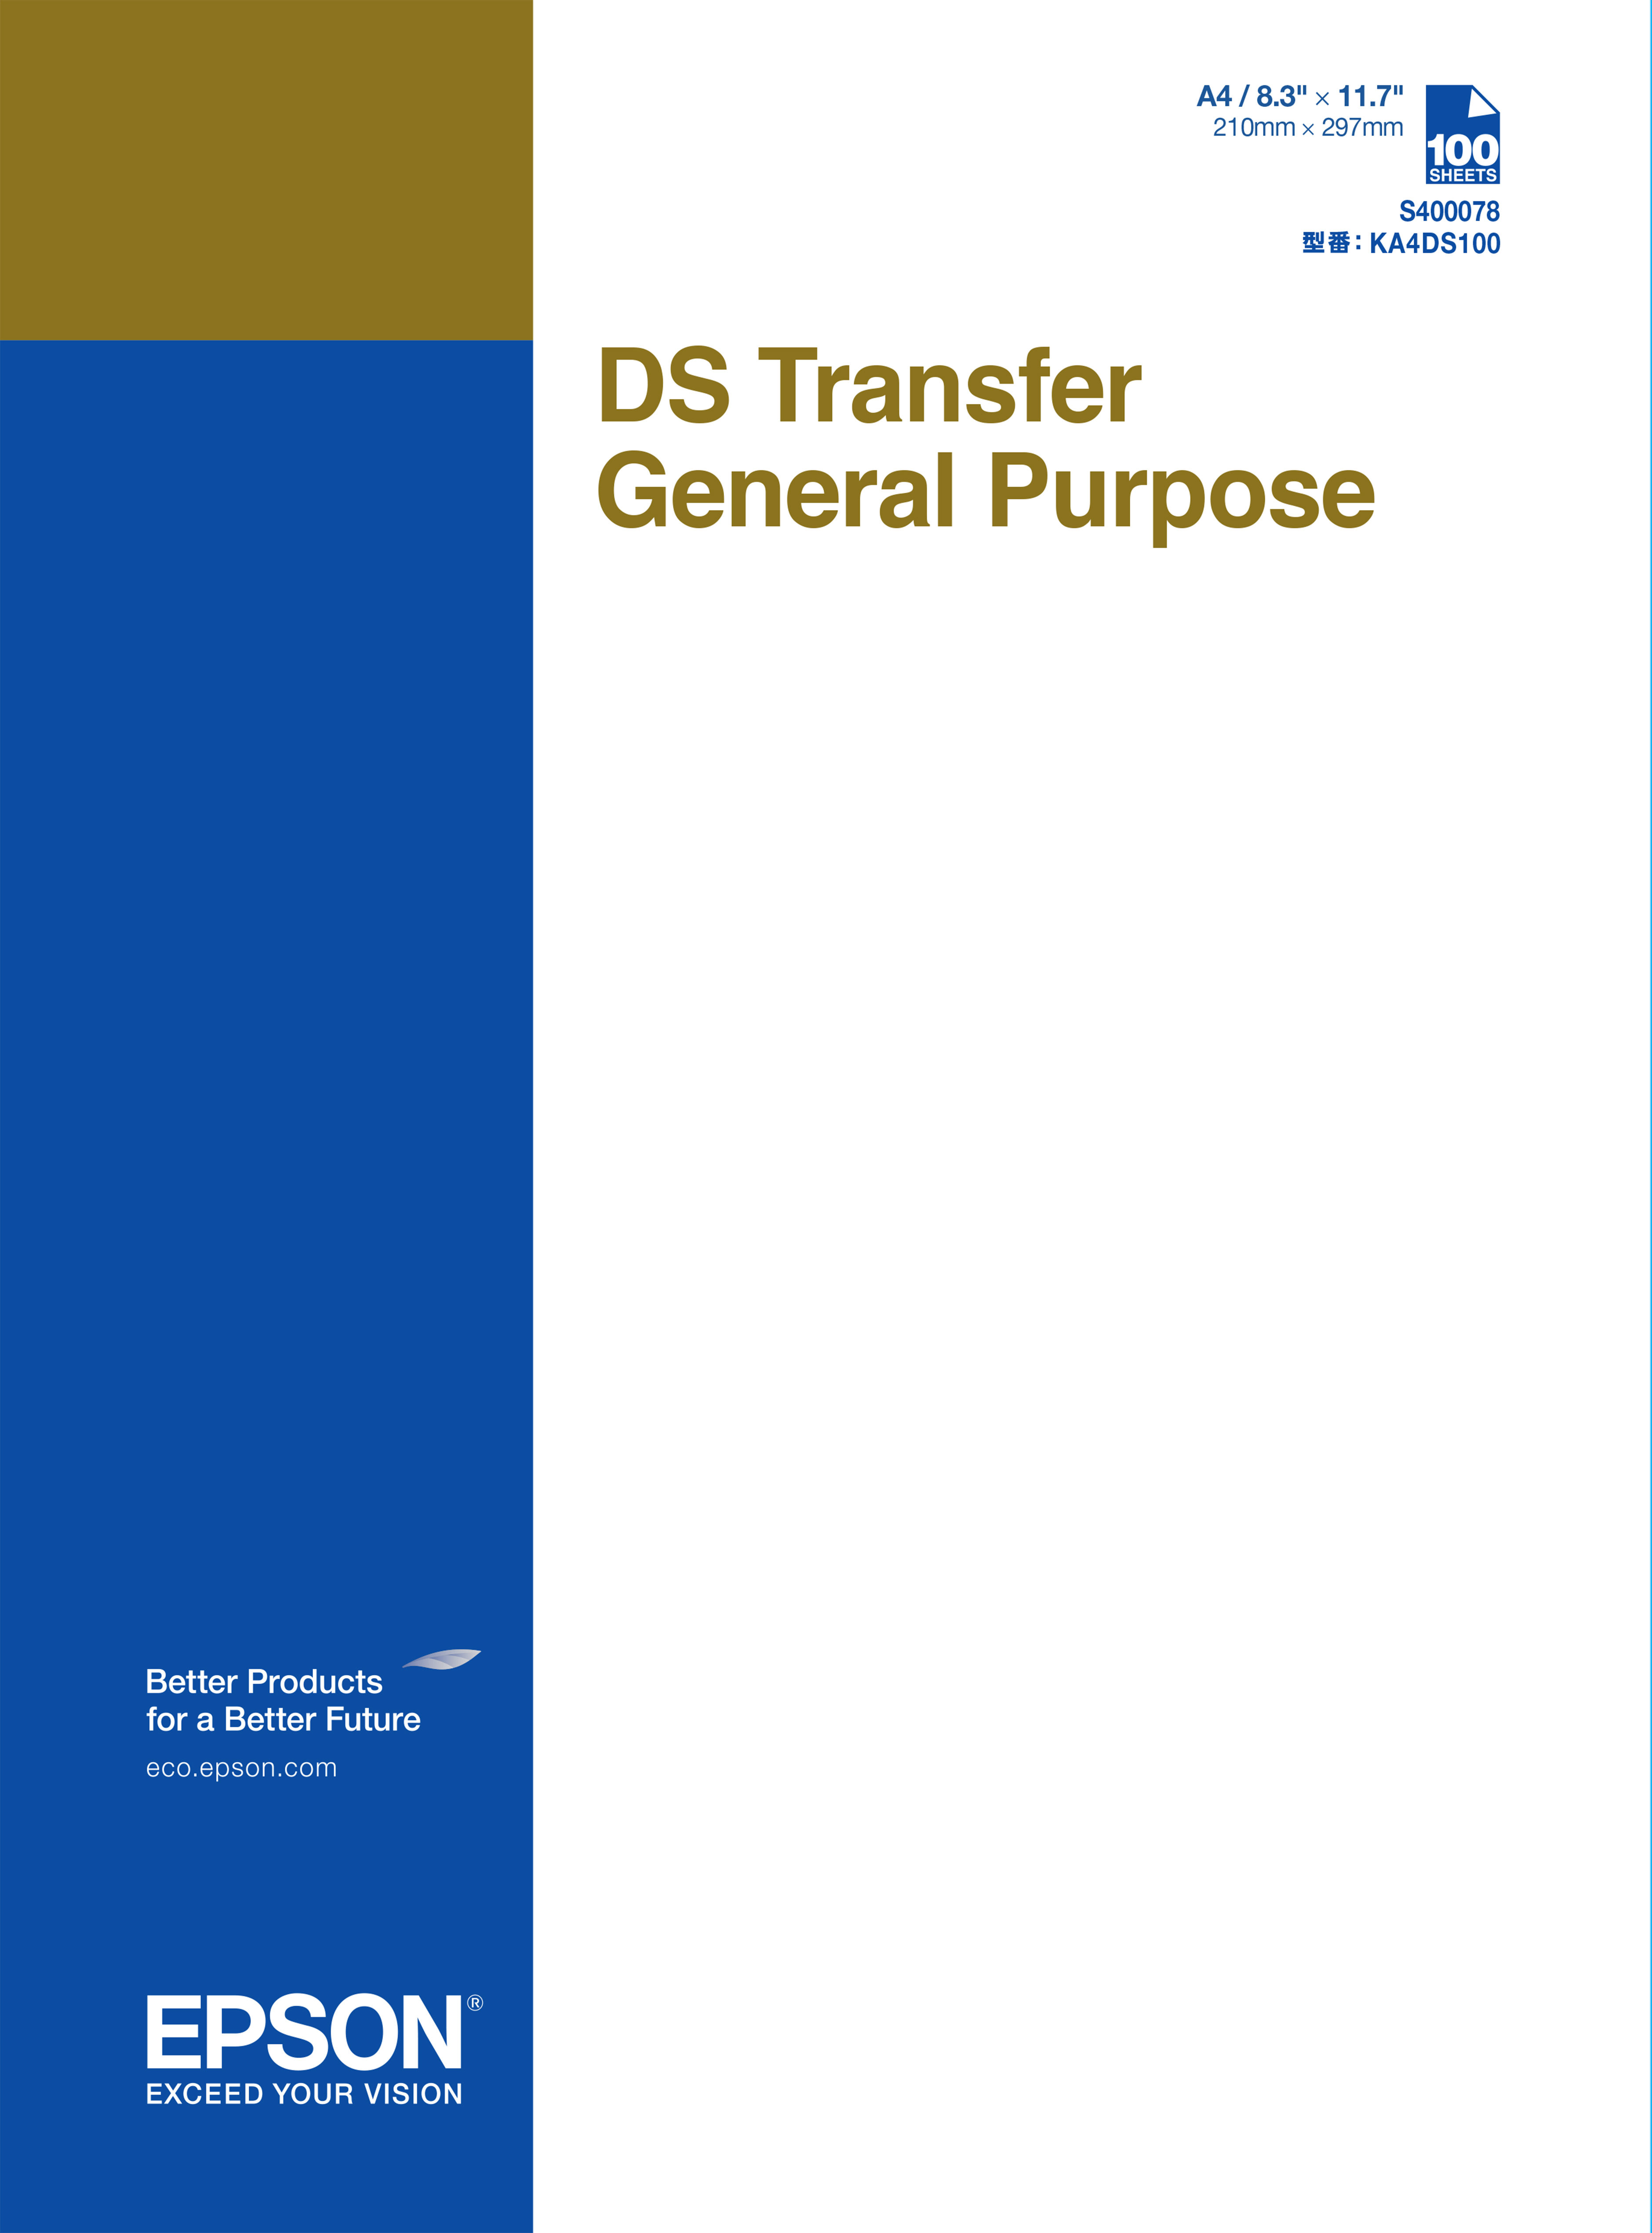 Epson DS Transfer General Purpose A4-vellen